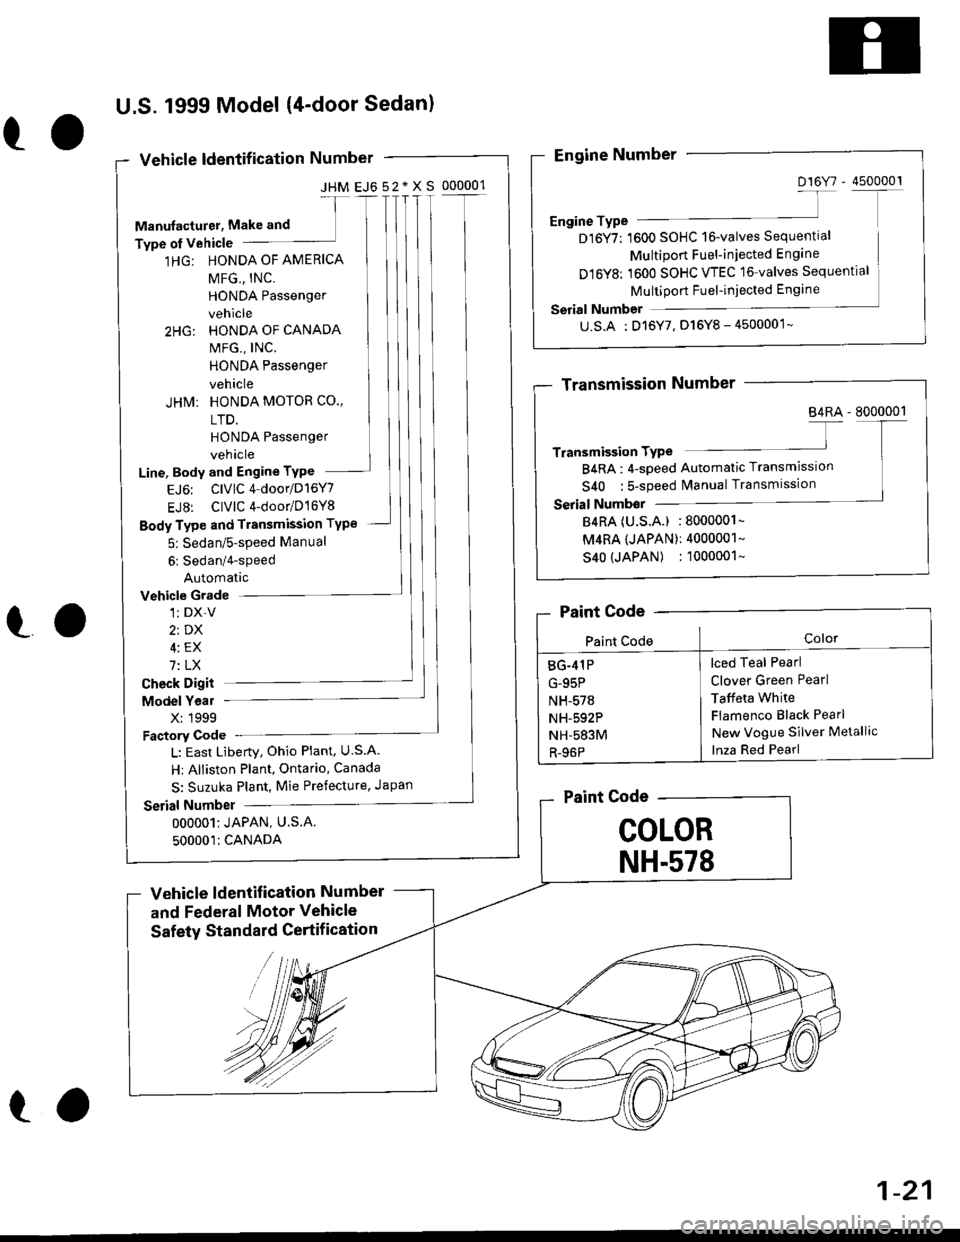 HONDA CIVIC 1997 6.G Owners Manual ro
U.S. 1999 Model (4door Sedan)
Vehicle ldentif ication Number
JHM EJ652*XS 000001-f
Manufacturel, Make and
Type ol vehicle
1HG: HONDA OF AMERICA
Vehicle Gradel: DX-V
2t DX
4: EX
7: LX
HONDA Passen